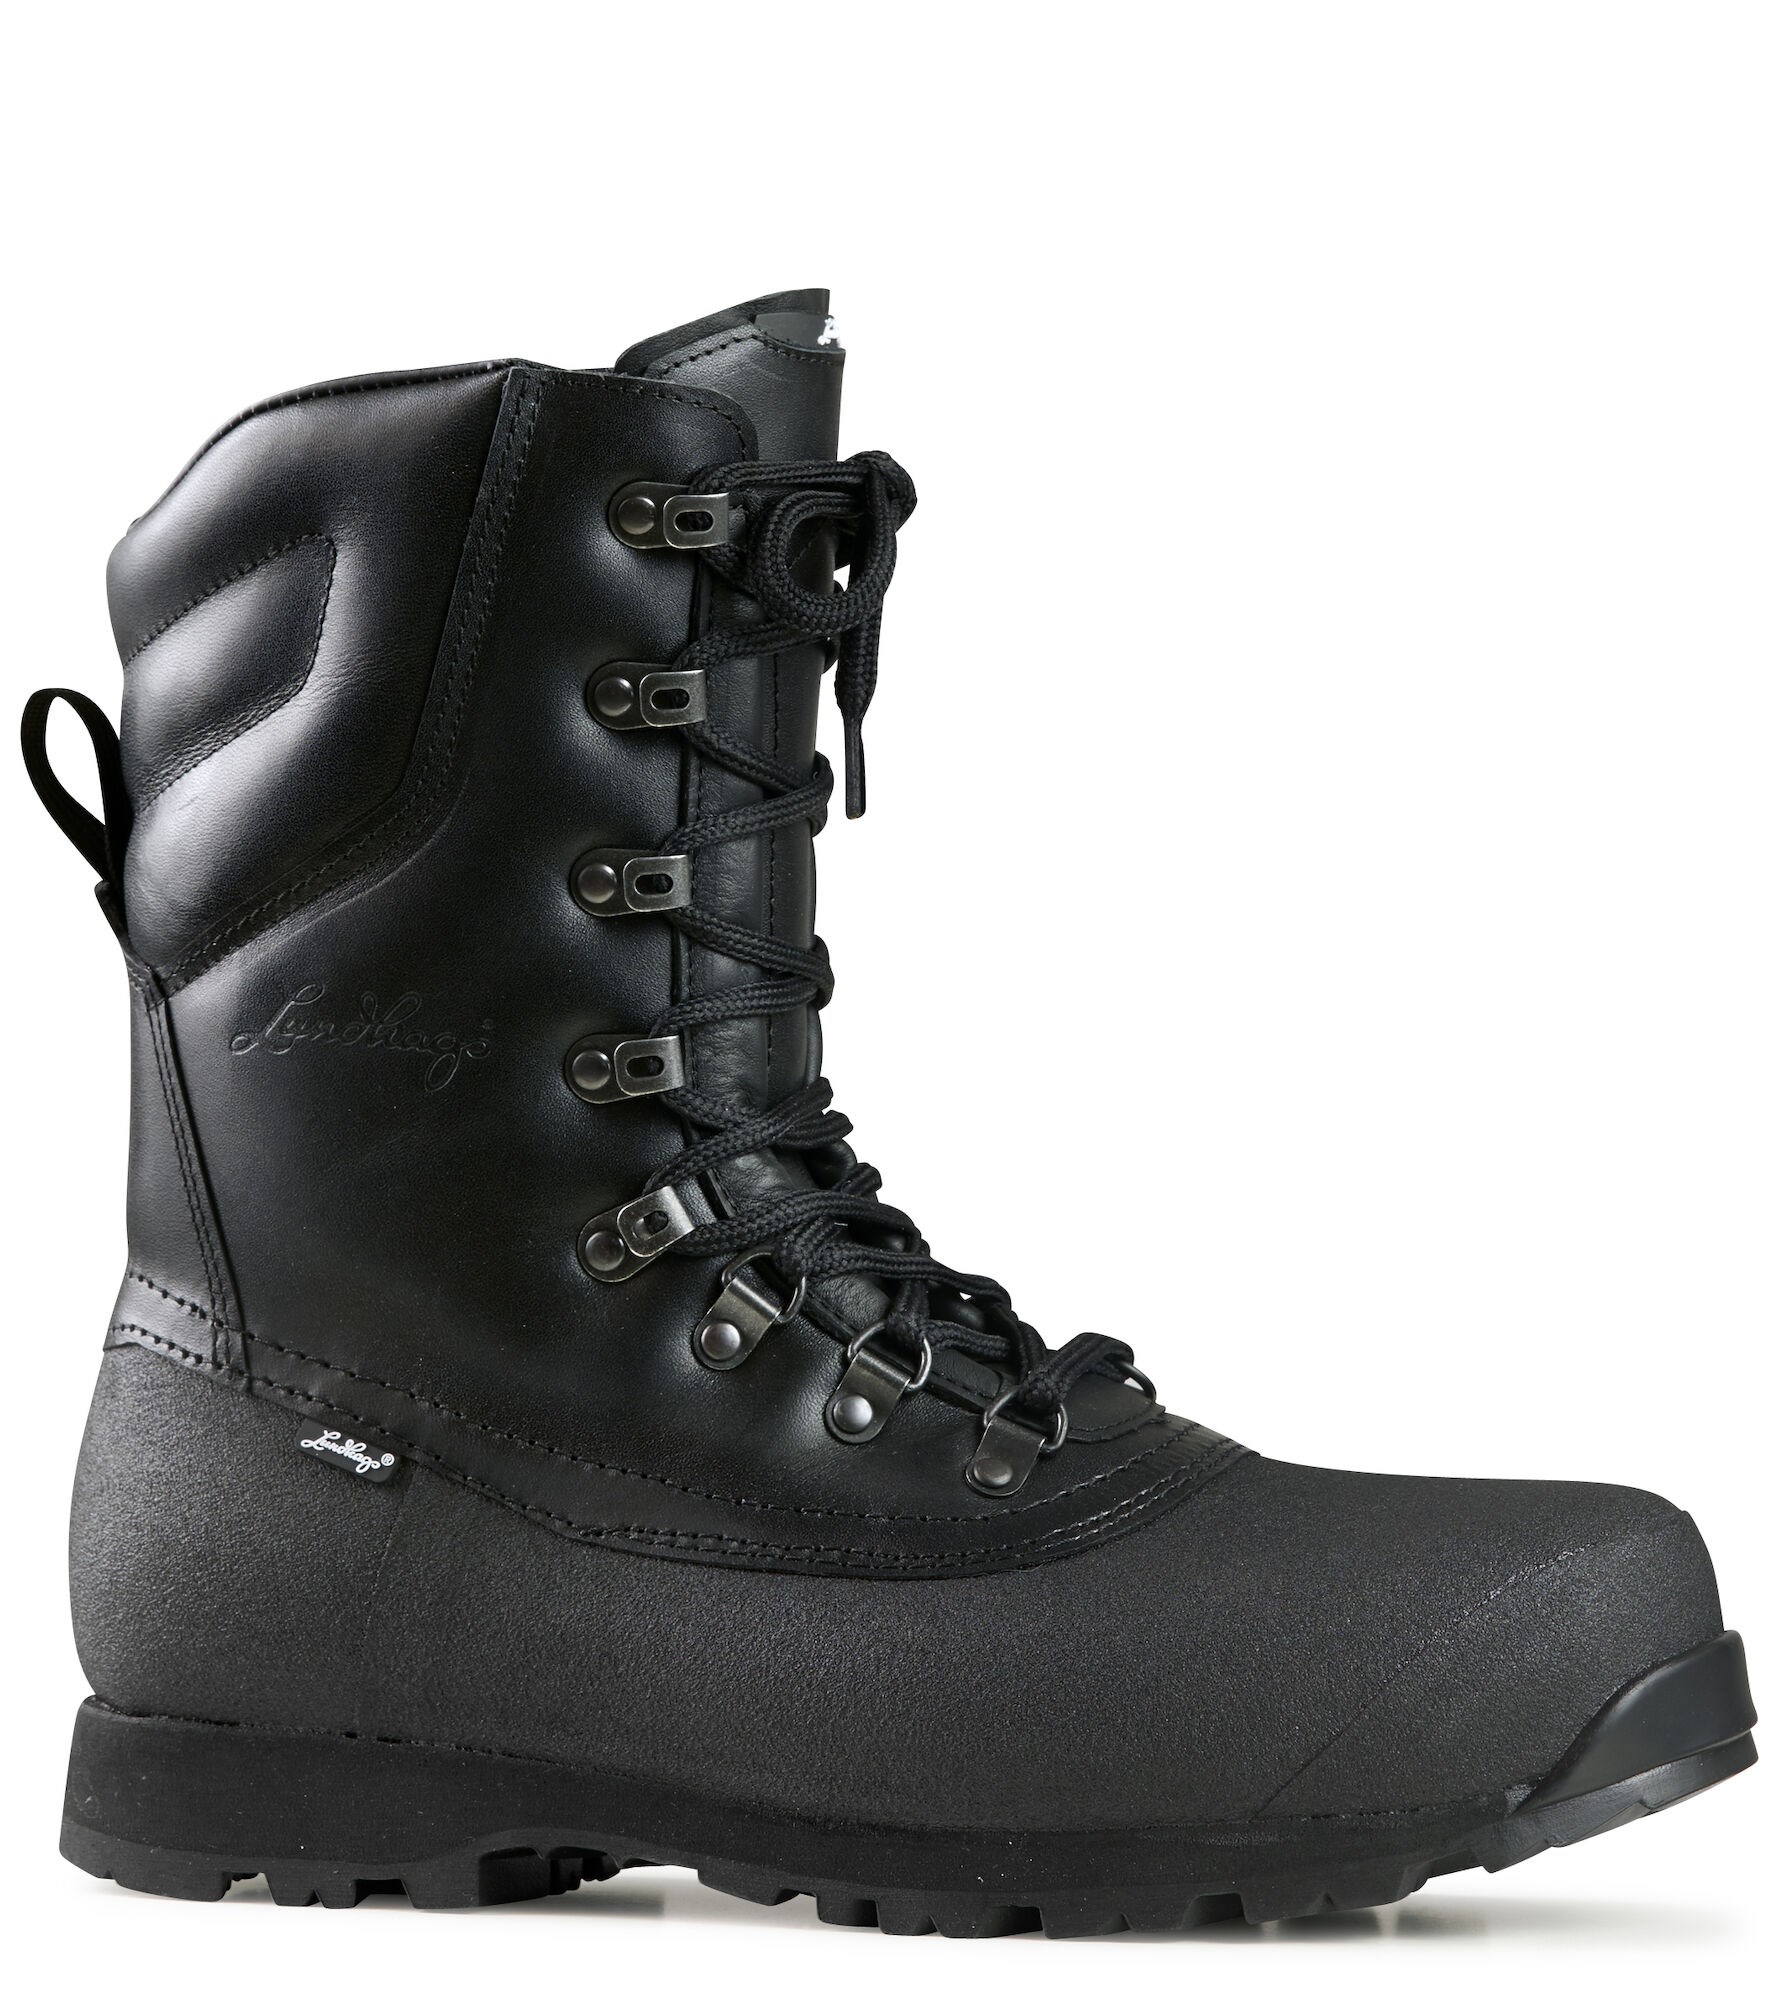 Professional II High Hiking Boots Unisex